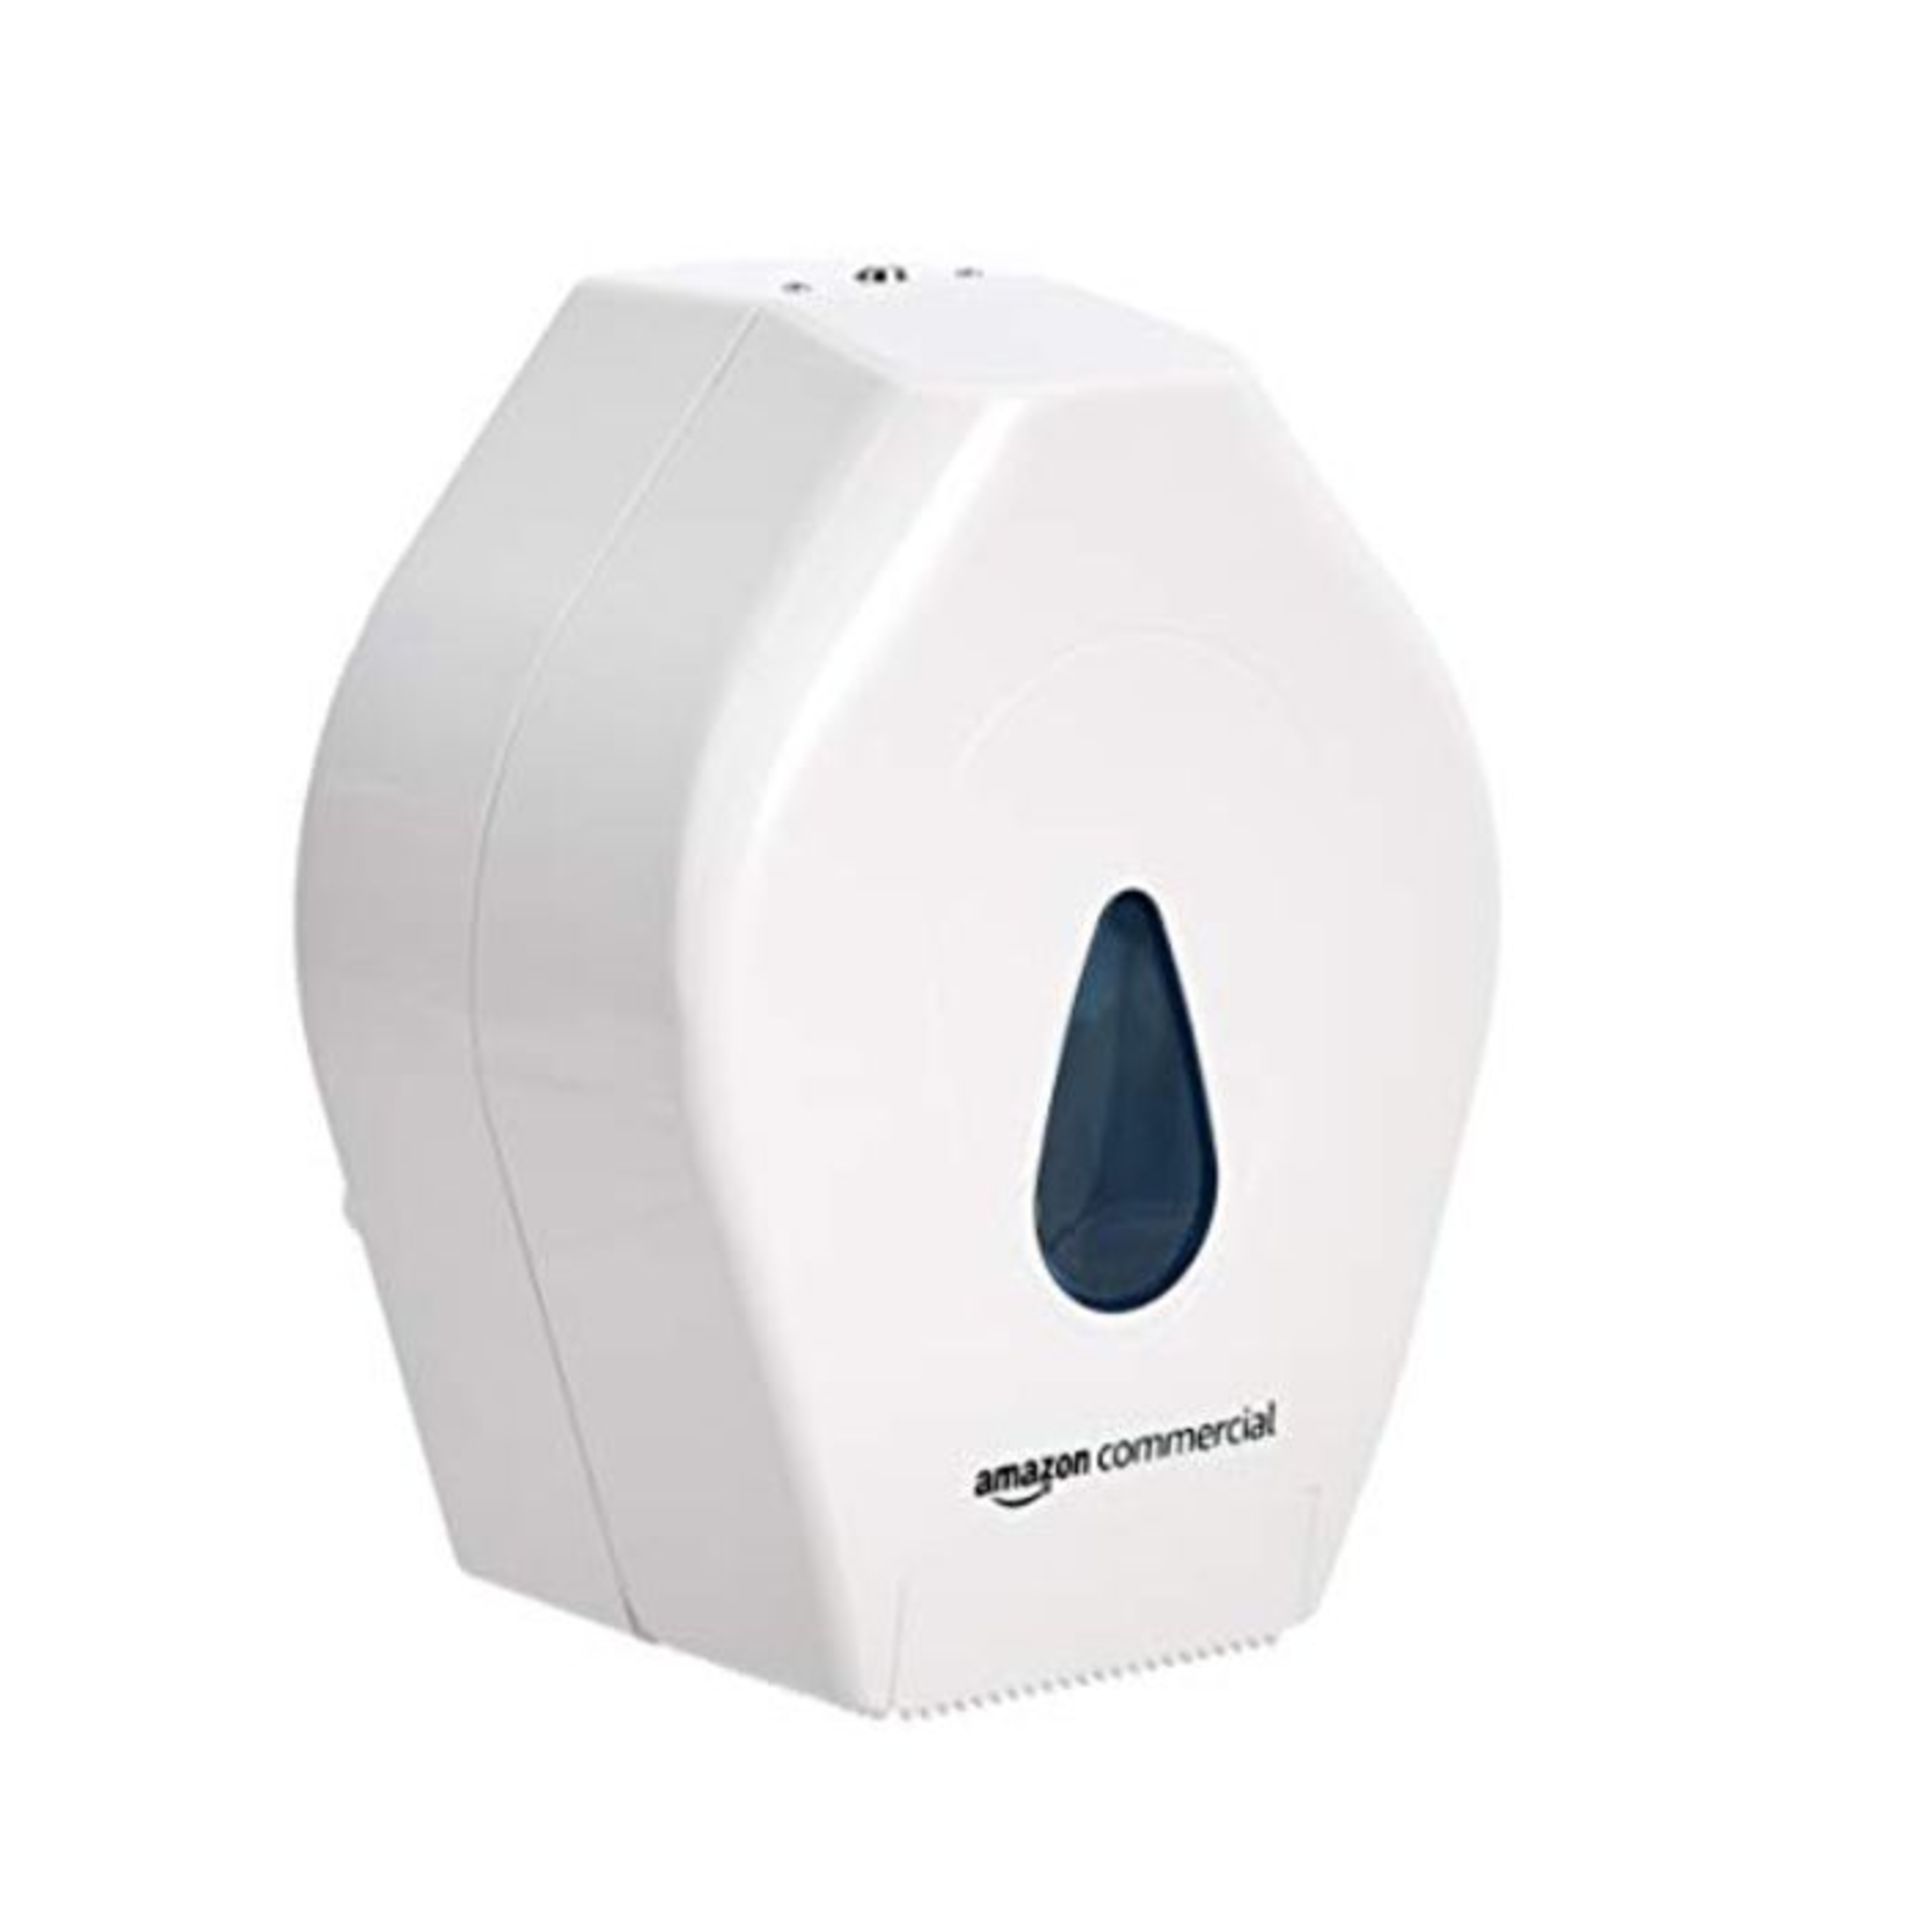 AmazonCommercial Mini Jumbo Toilet Paper Dispenser